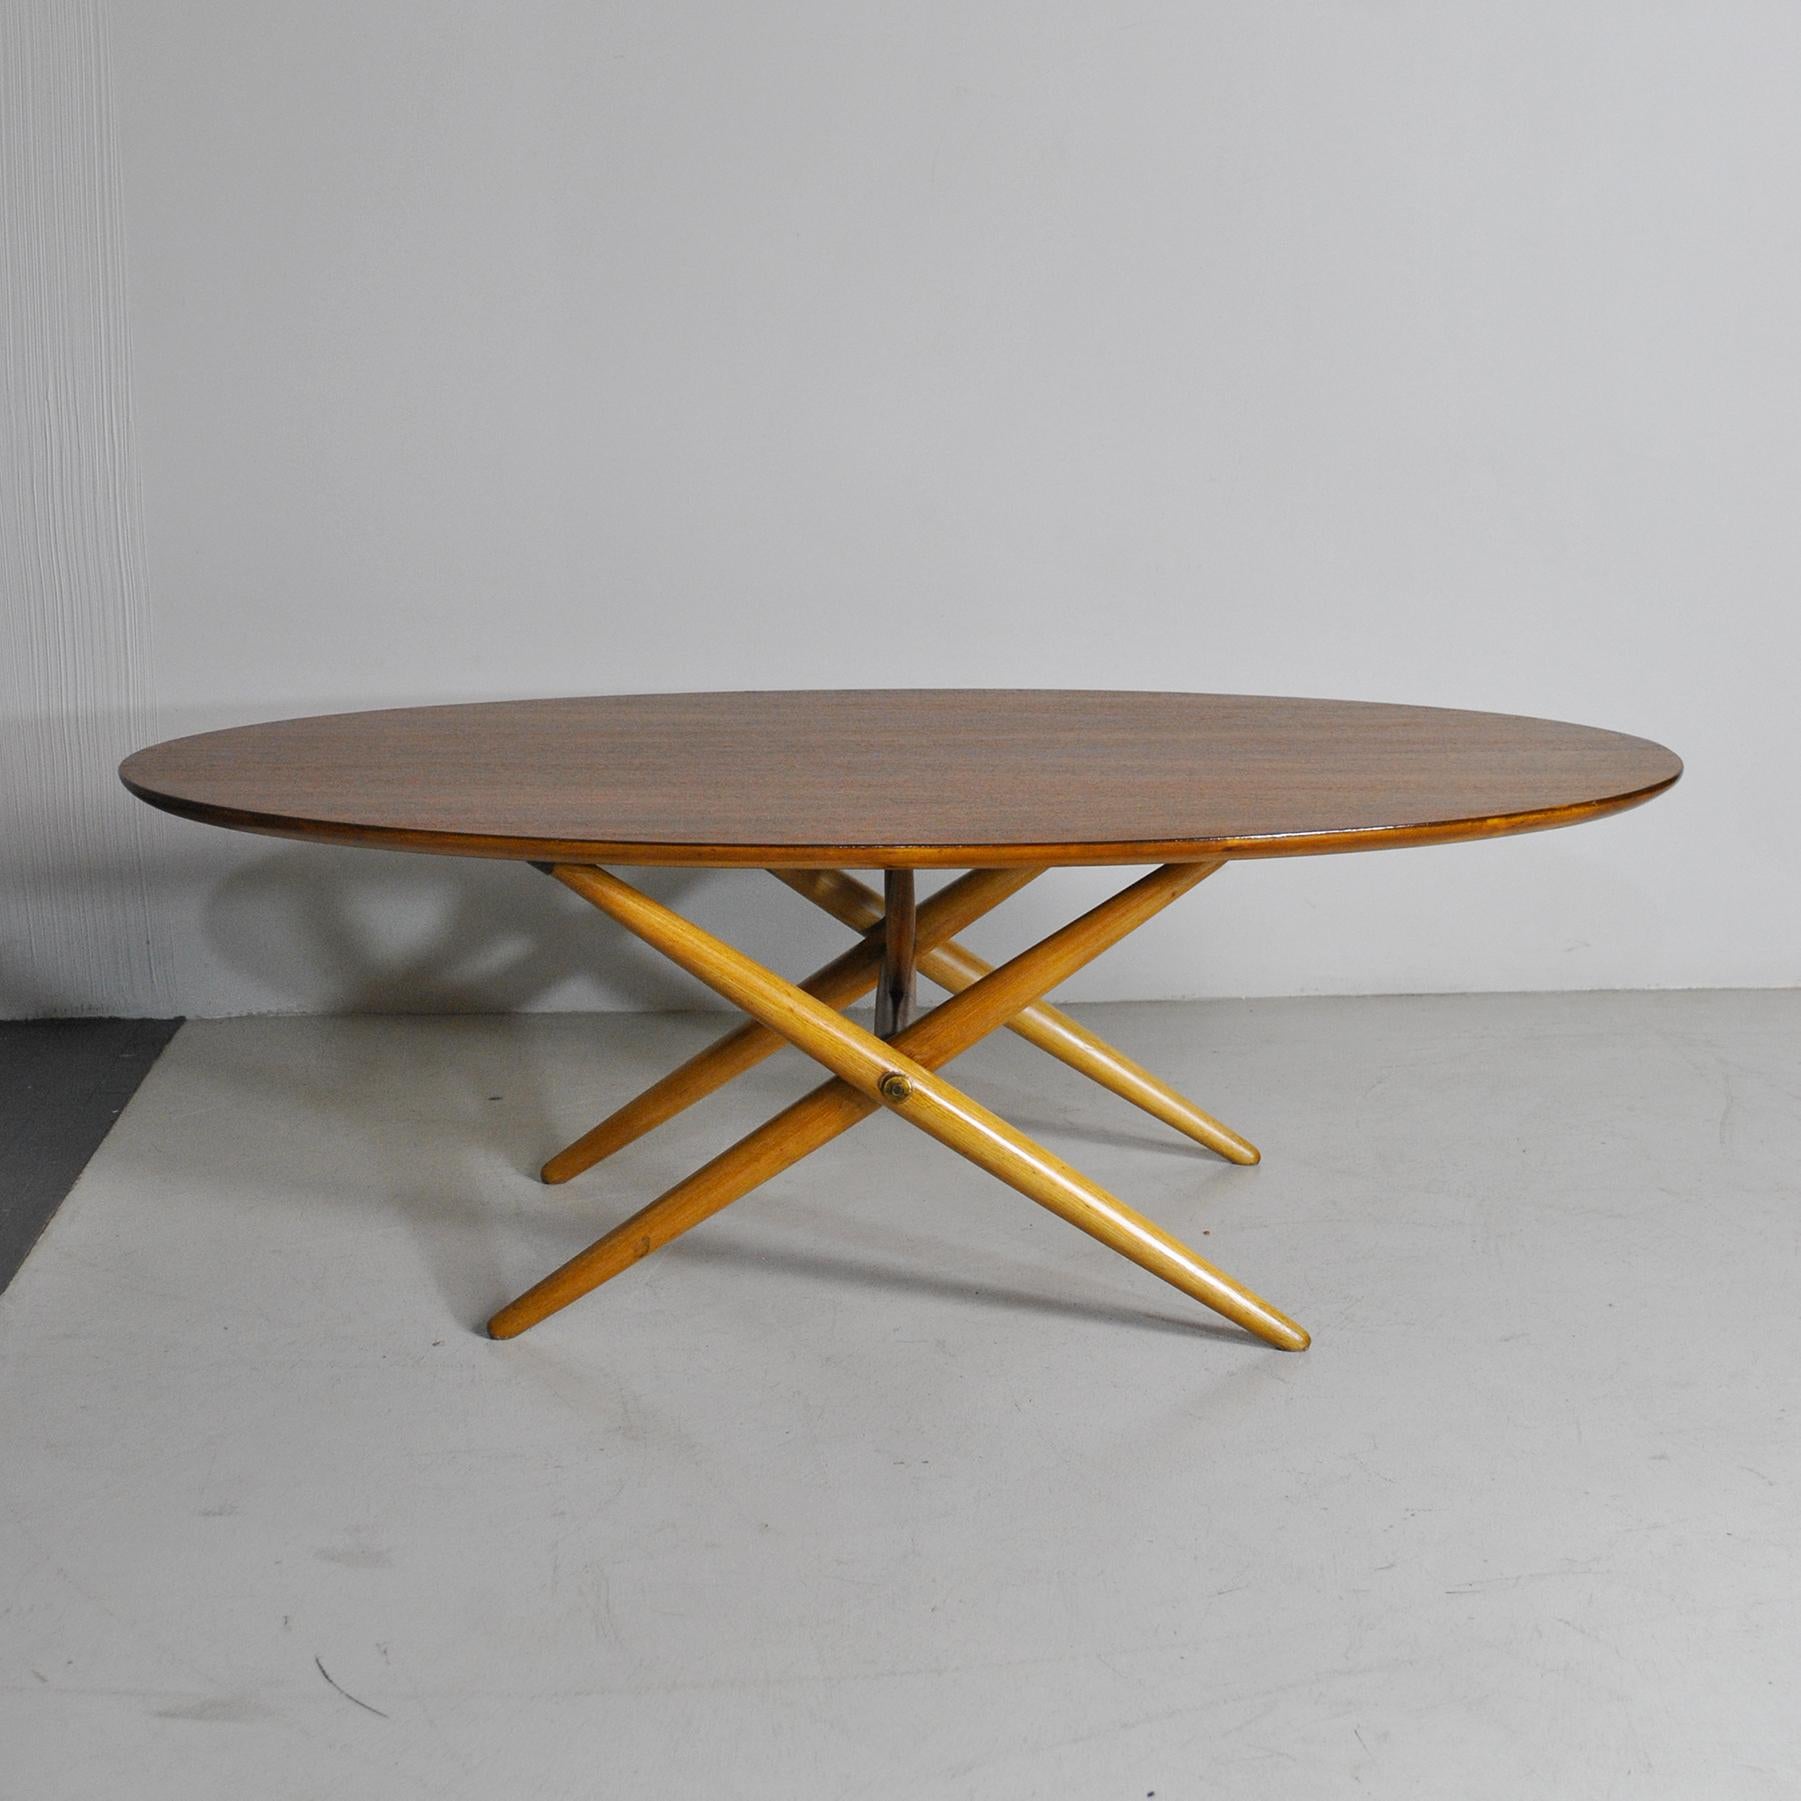 Vintage coffee table model ovalette by Ilmari Tapiovaara per Artek 1958.